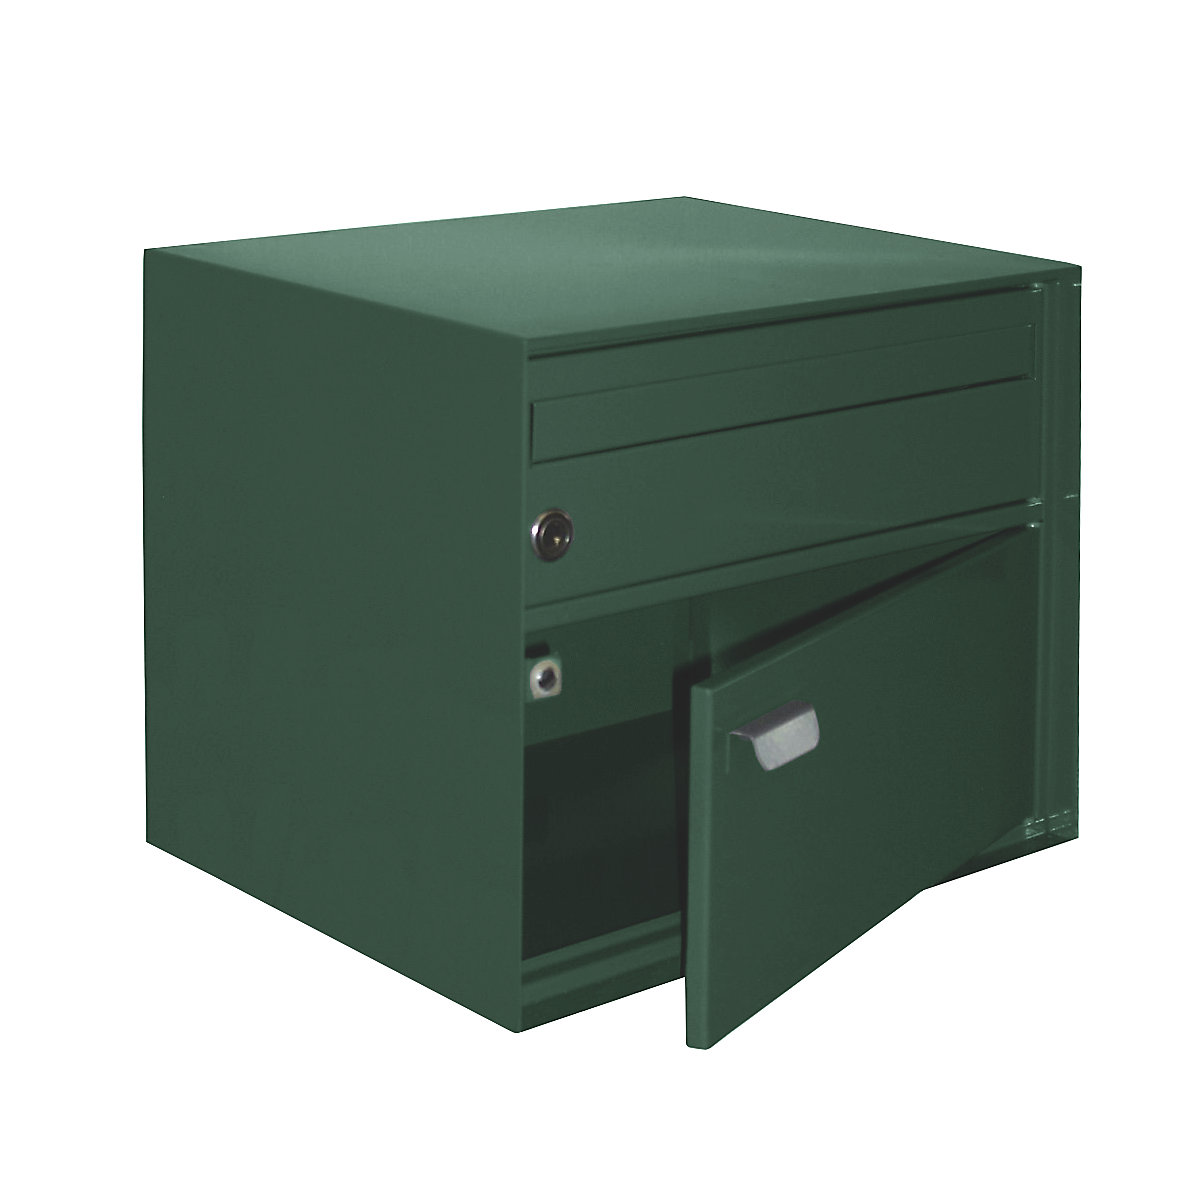 Letter box, WxHxD 390 x 315 x 310 mm, sheet steel, powder coated, moss green-3